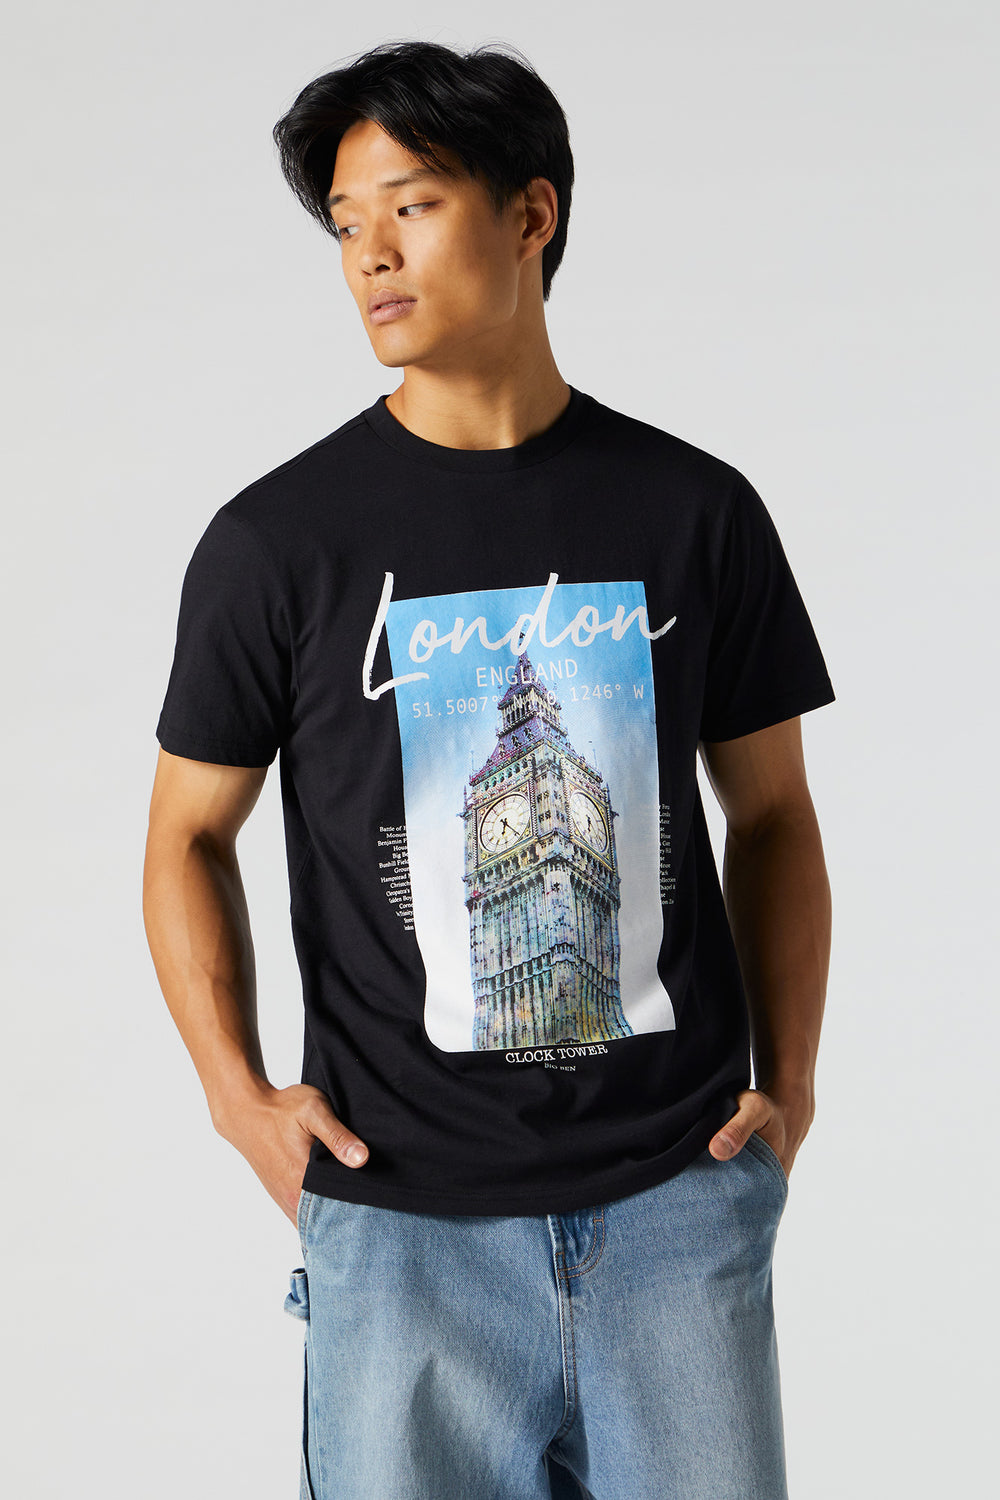 London England Graphic T-Shirt London England Graphic T-Shirt 2